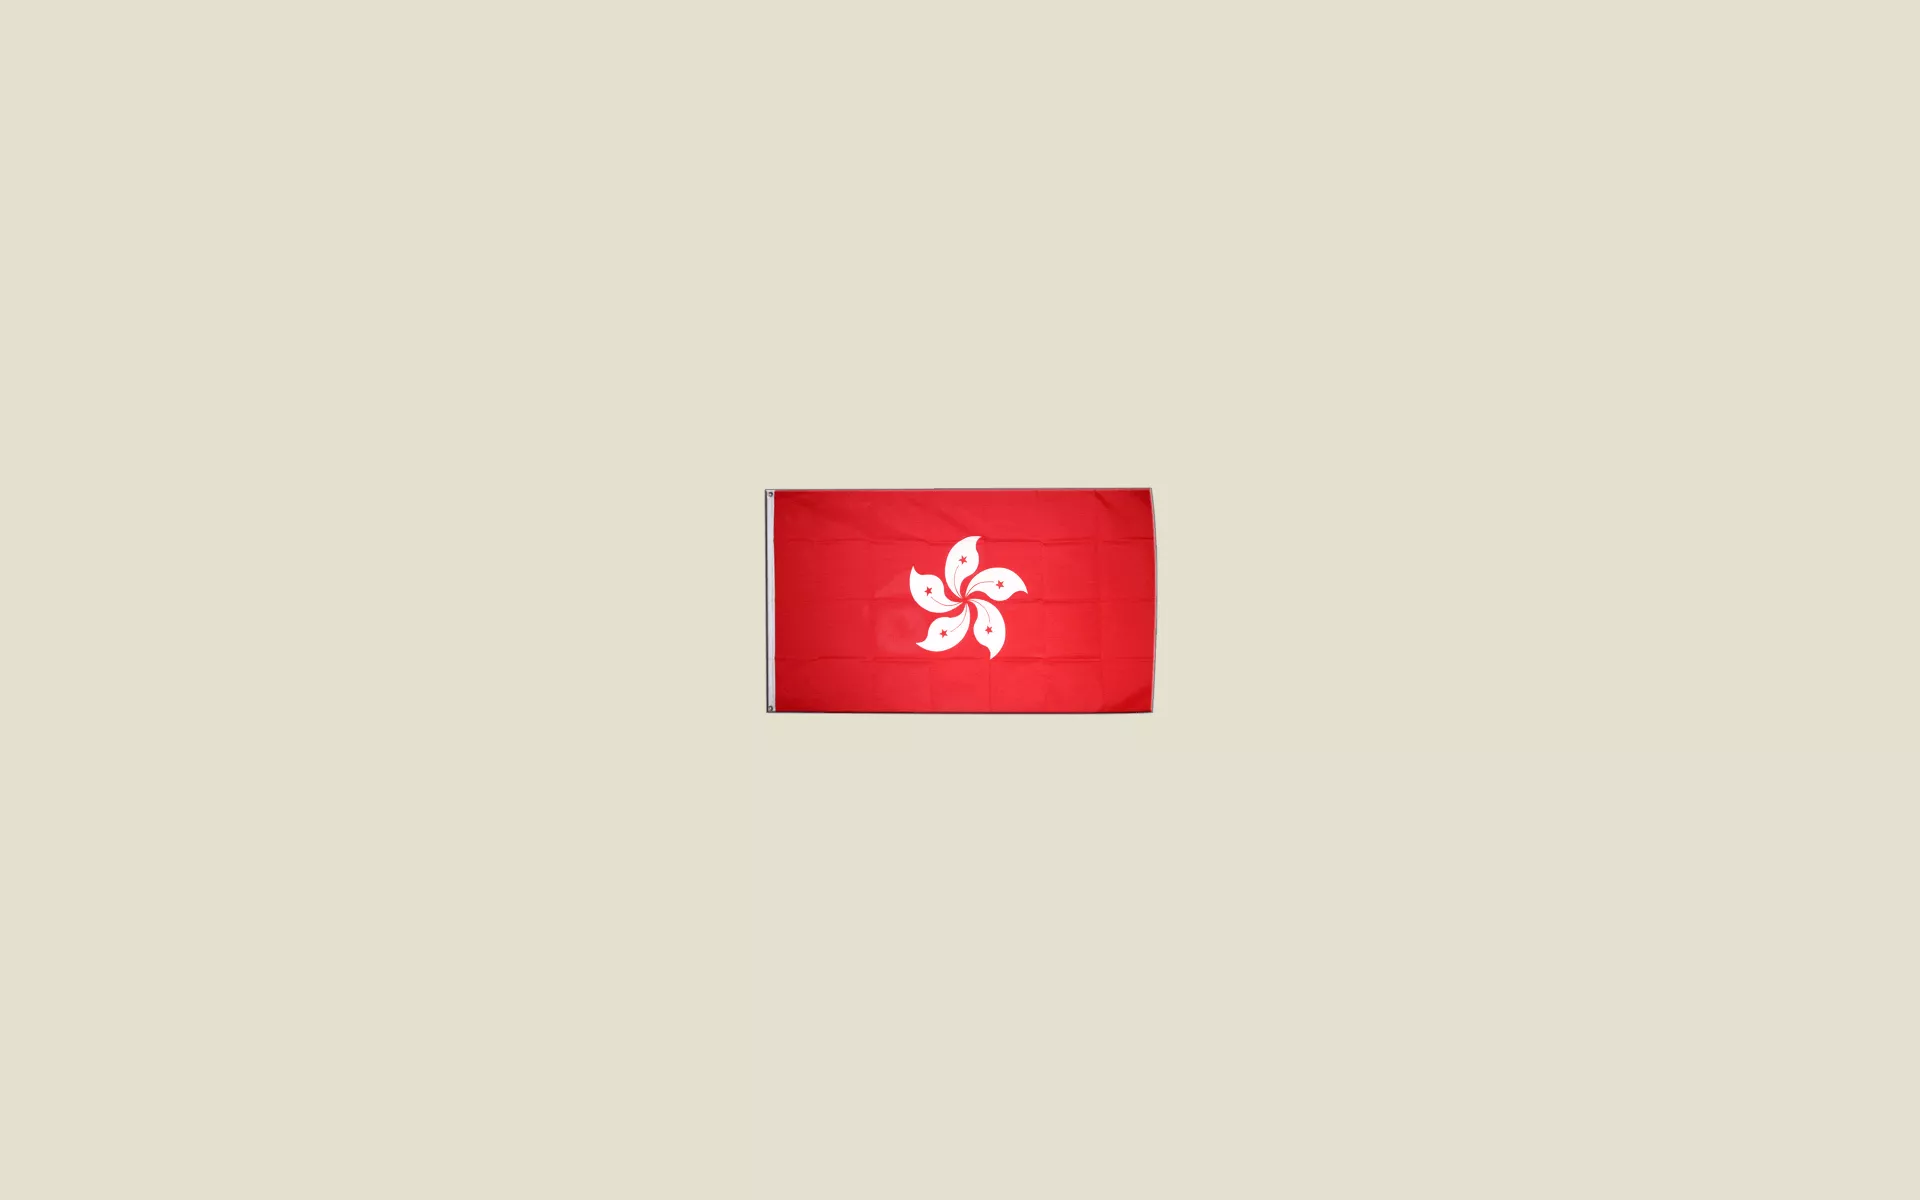 Flagge fahne hongkong gãnstig kaufen